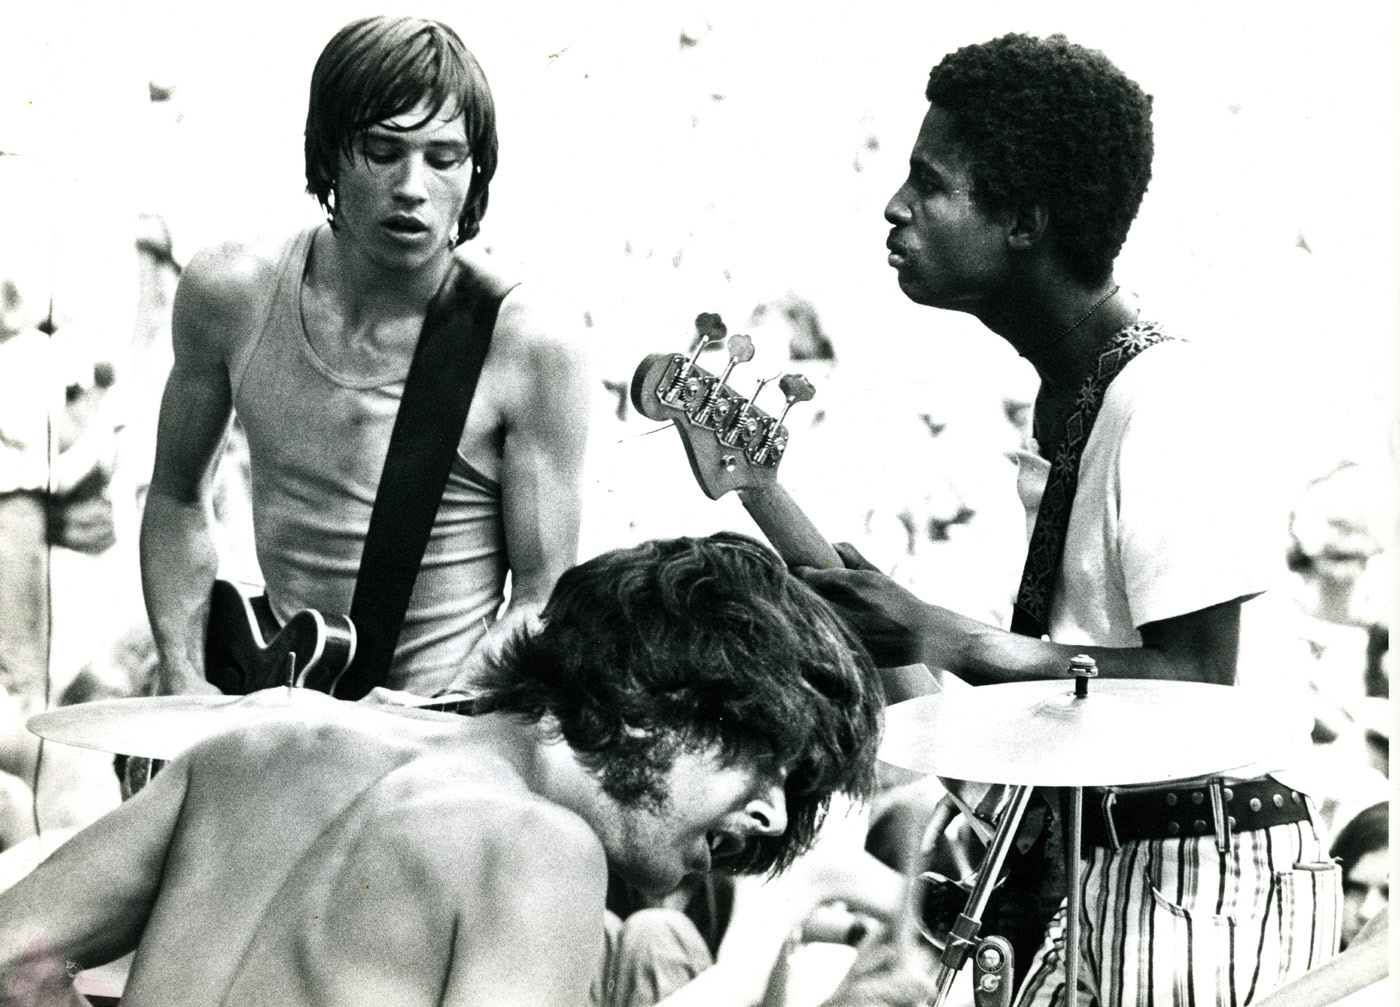 Wheatstraw on stage in Greenwood Park in Des Moines: Ron Dewitte (guitar), Dartanyan (bass) and David Bernstein (on drums). Photo by Bill Plymat